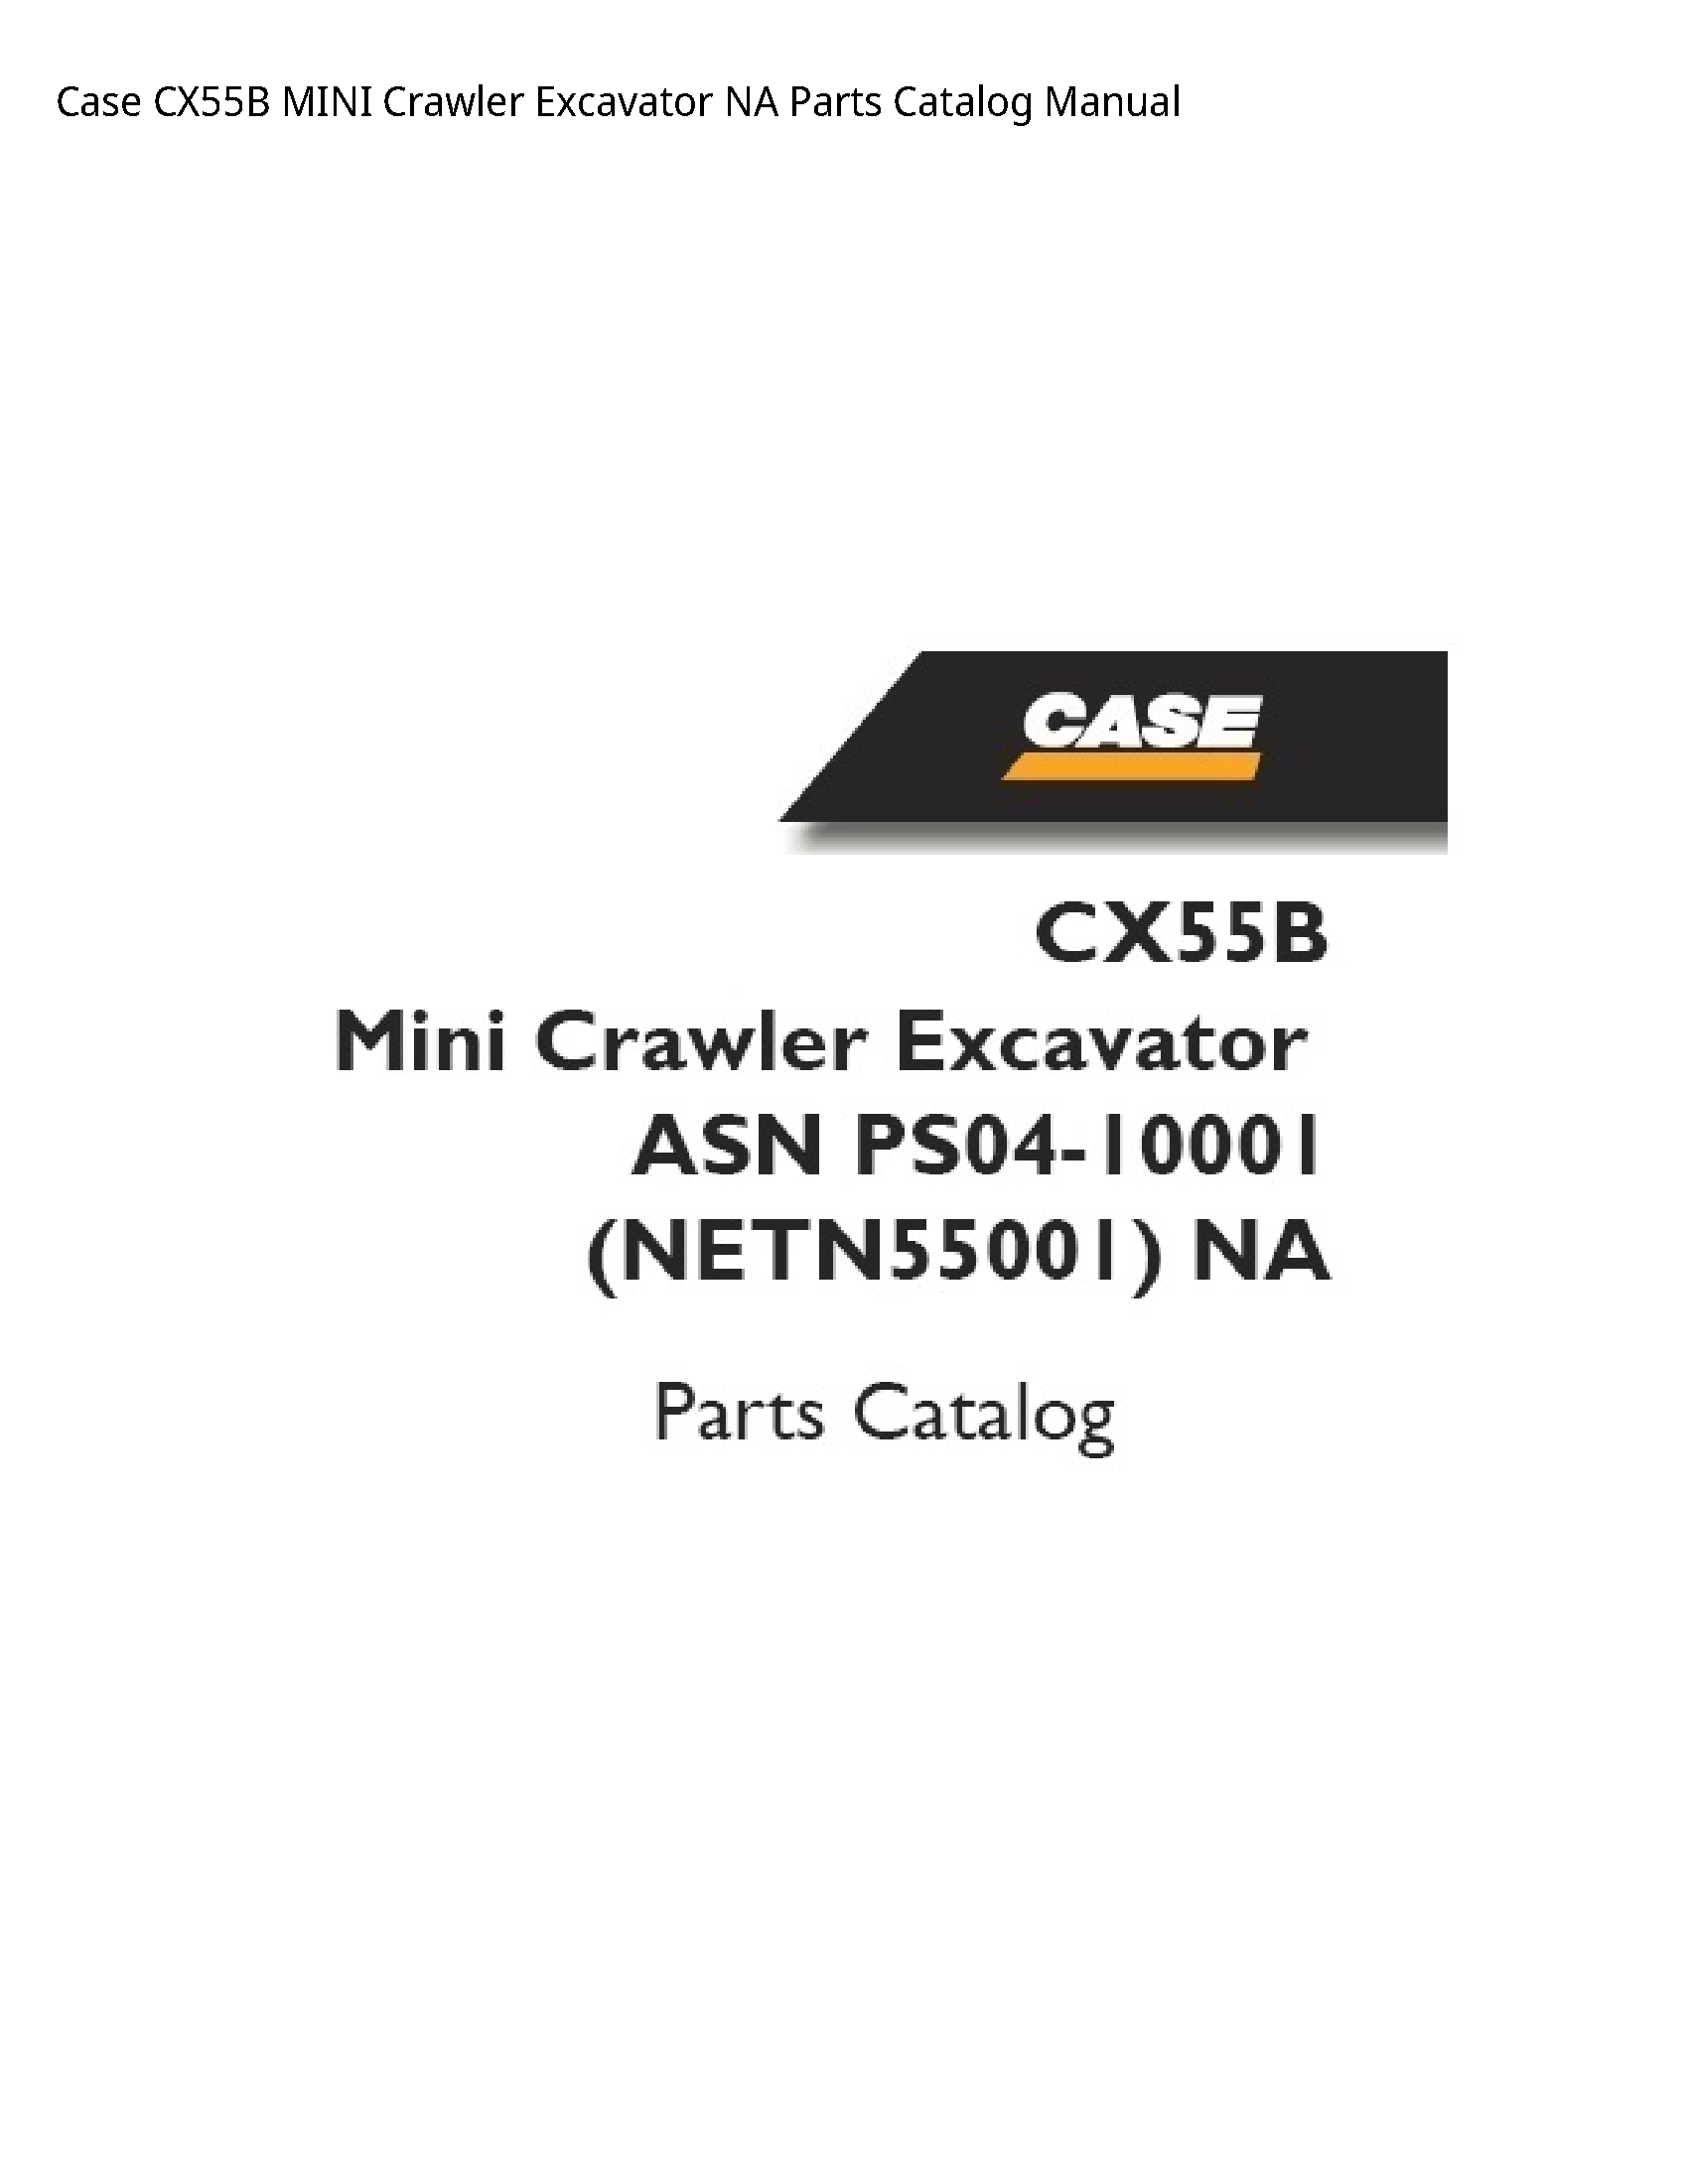 Case/Case IH CX55B MINI Crawler Excavator NA Parts Catalog manual